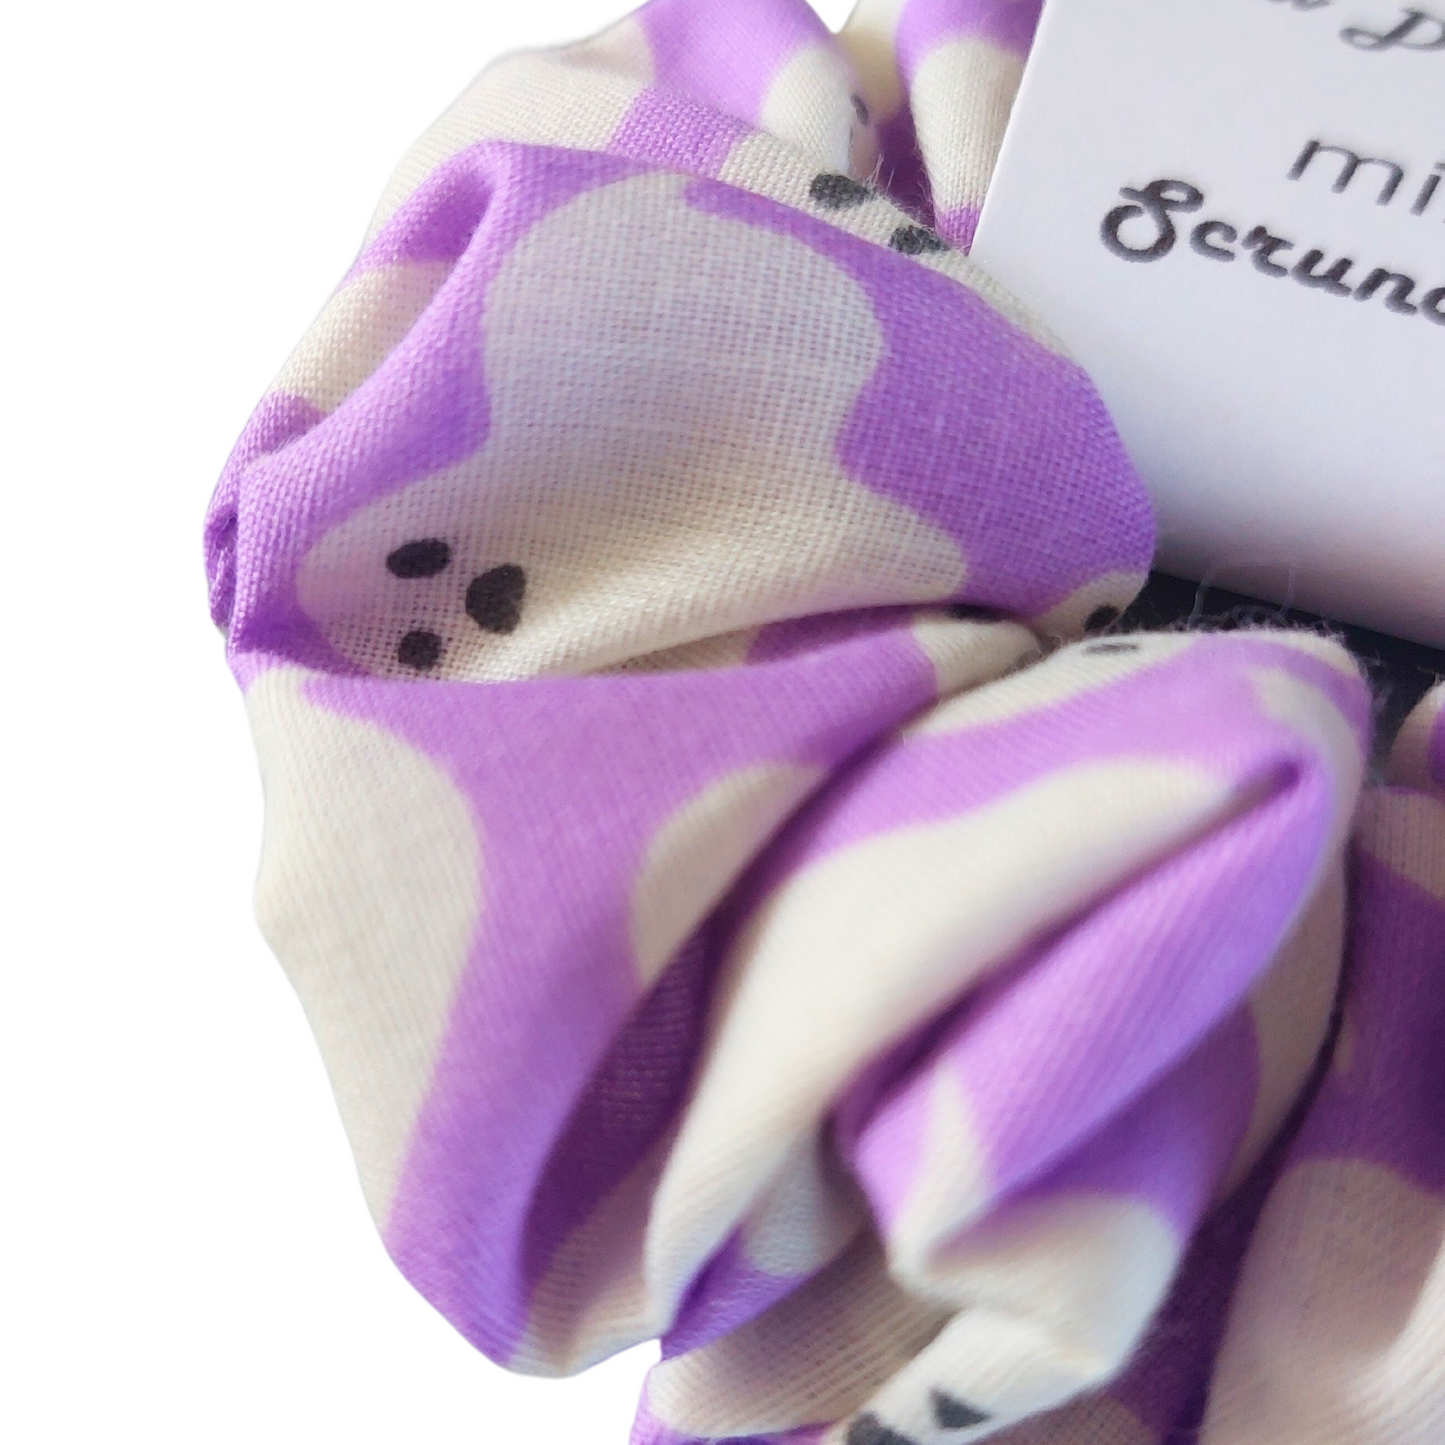 Mini scrunchie Halloween lilac ghosts